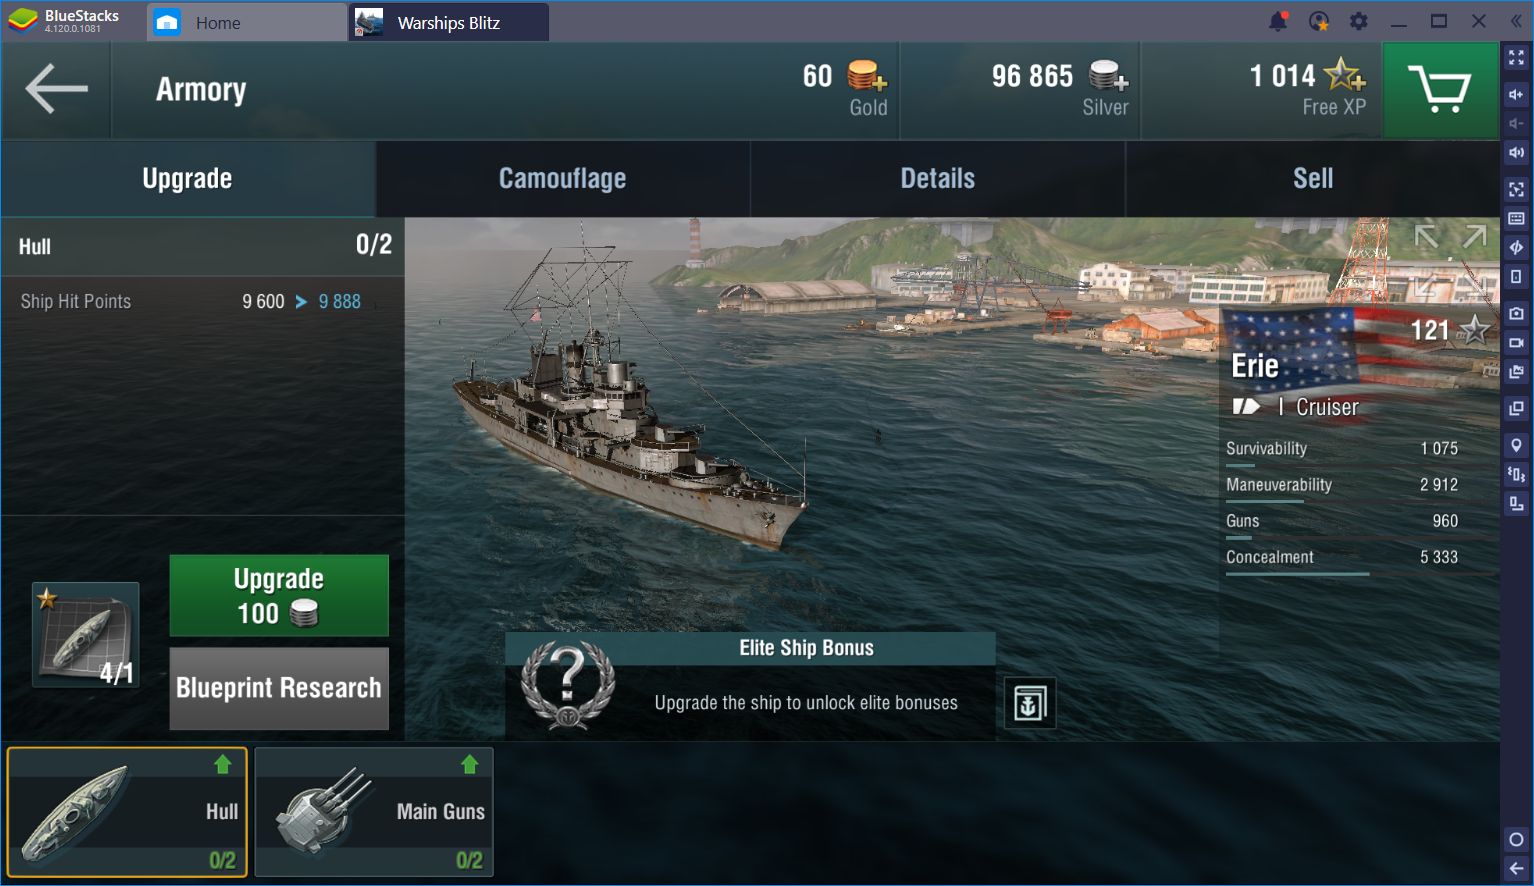 World of Warships Blitz on BlueStacks: The Best Navy Game?